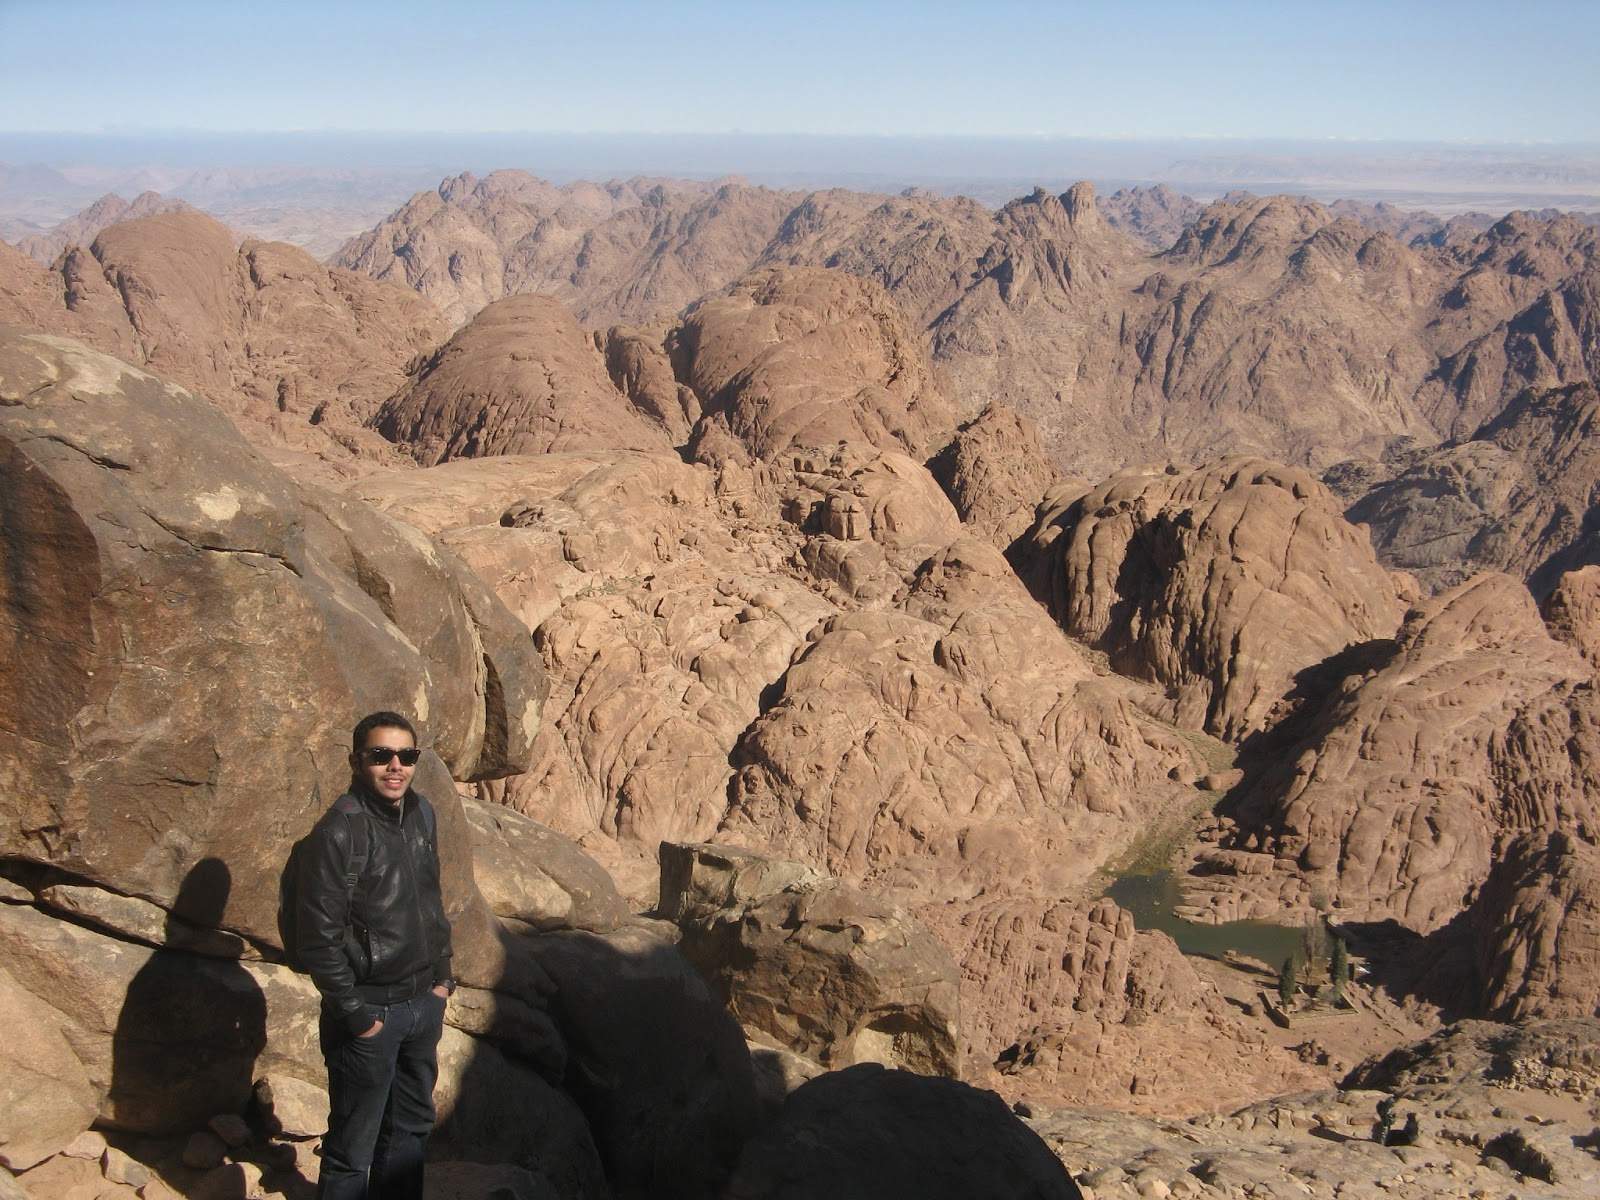 Sinai félsziget szent katalin monostor